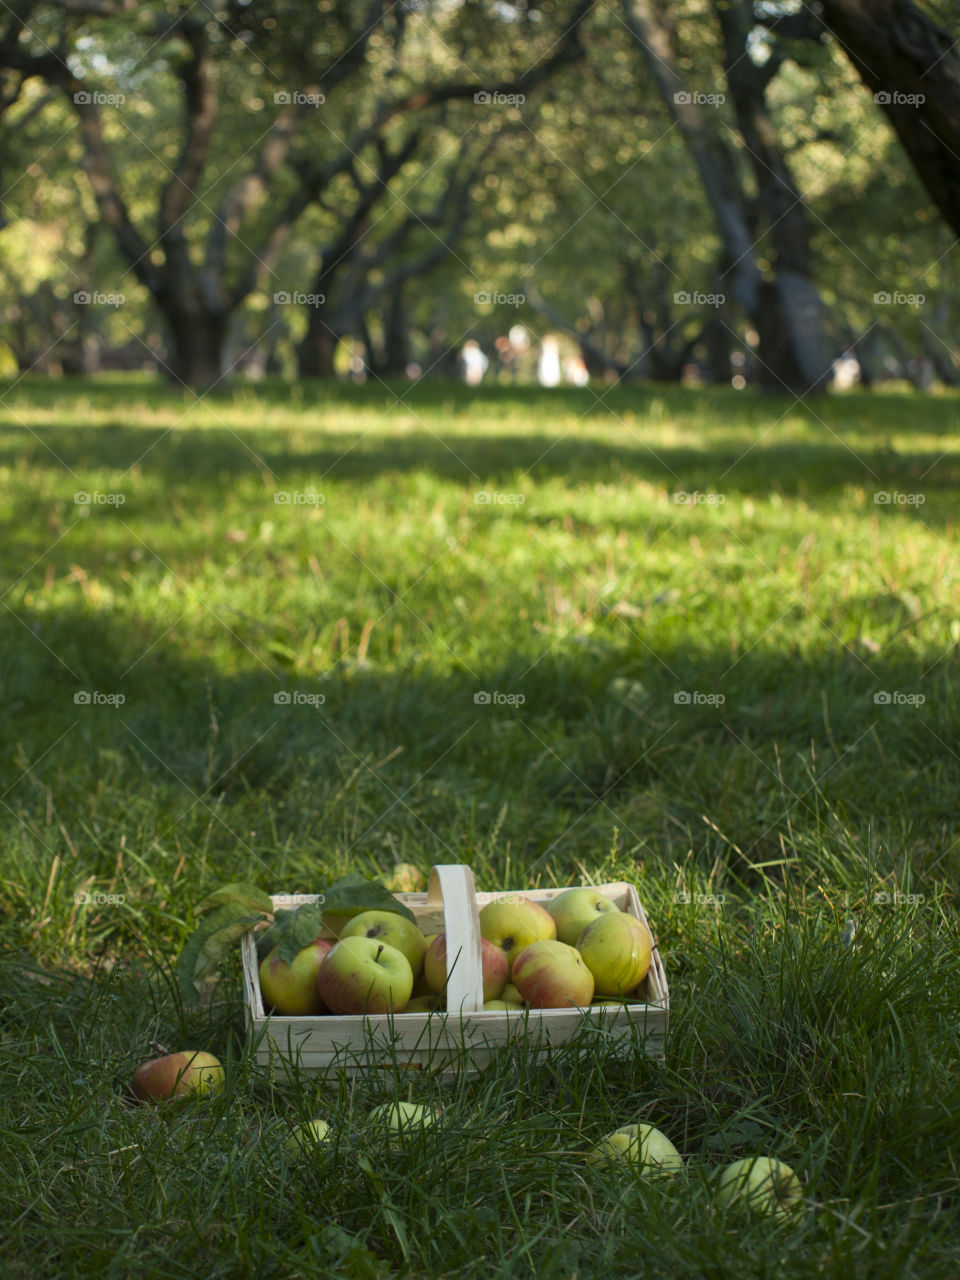 apple basket in a garden